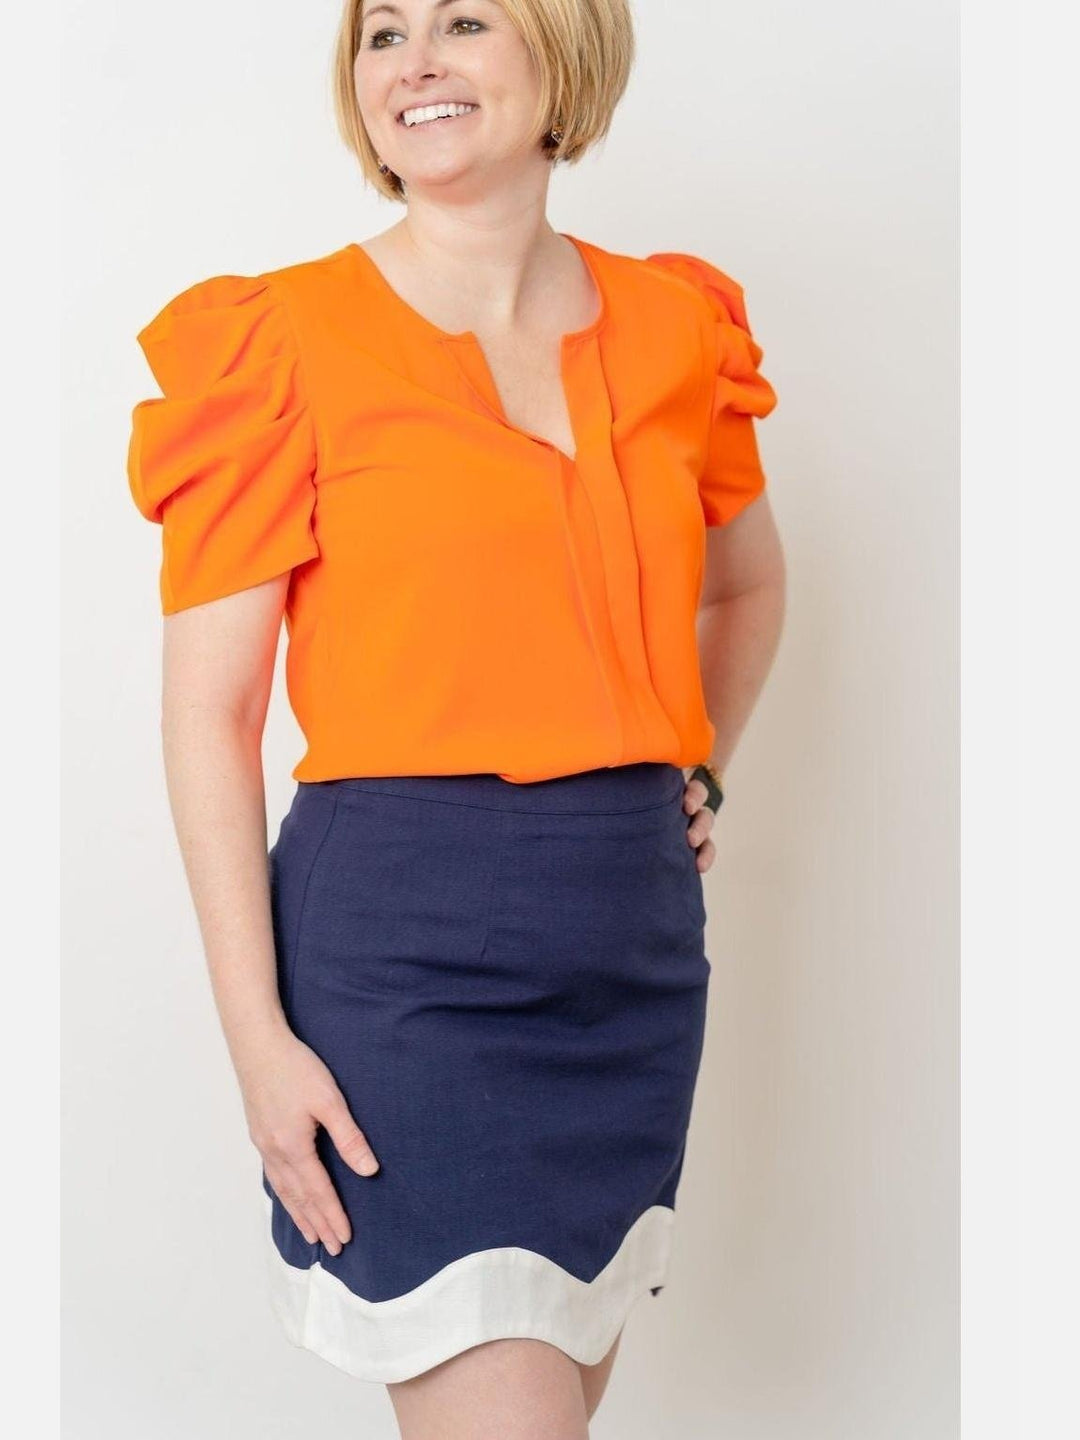 Orange Puff Short Sleeved Top - Lolo Viv Boutique